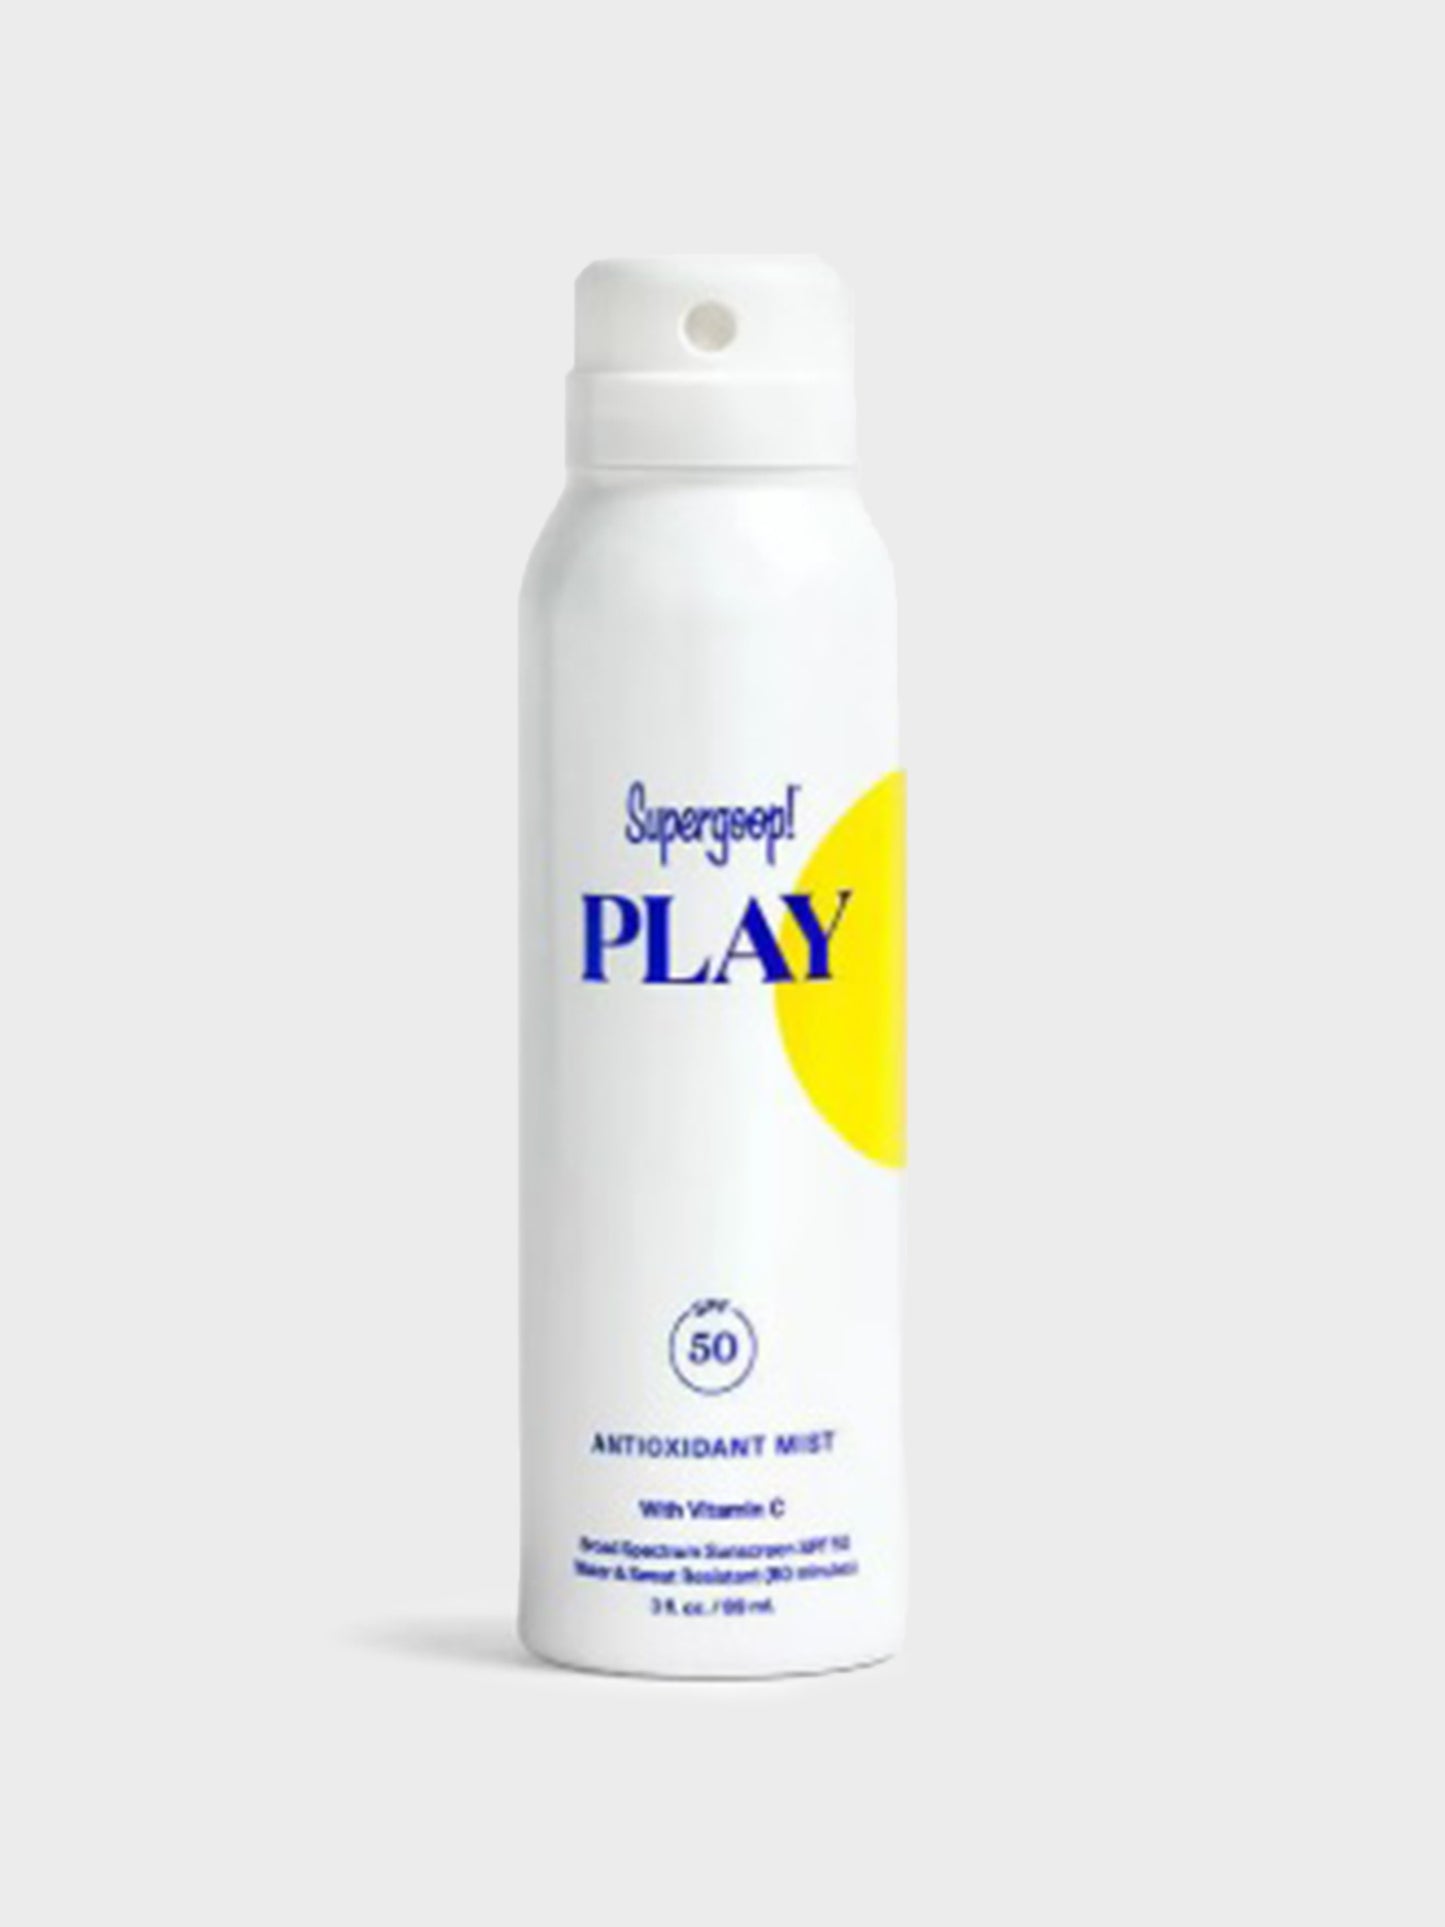 Supergoop PLAY Antioxidant Body Mist SPF 50 With Vitamin C 3oz